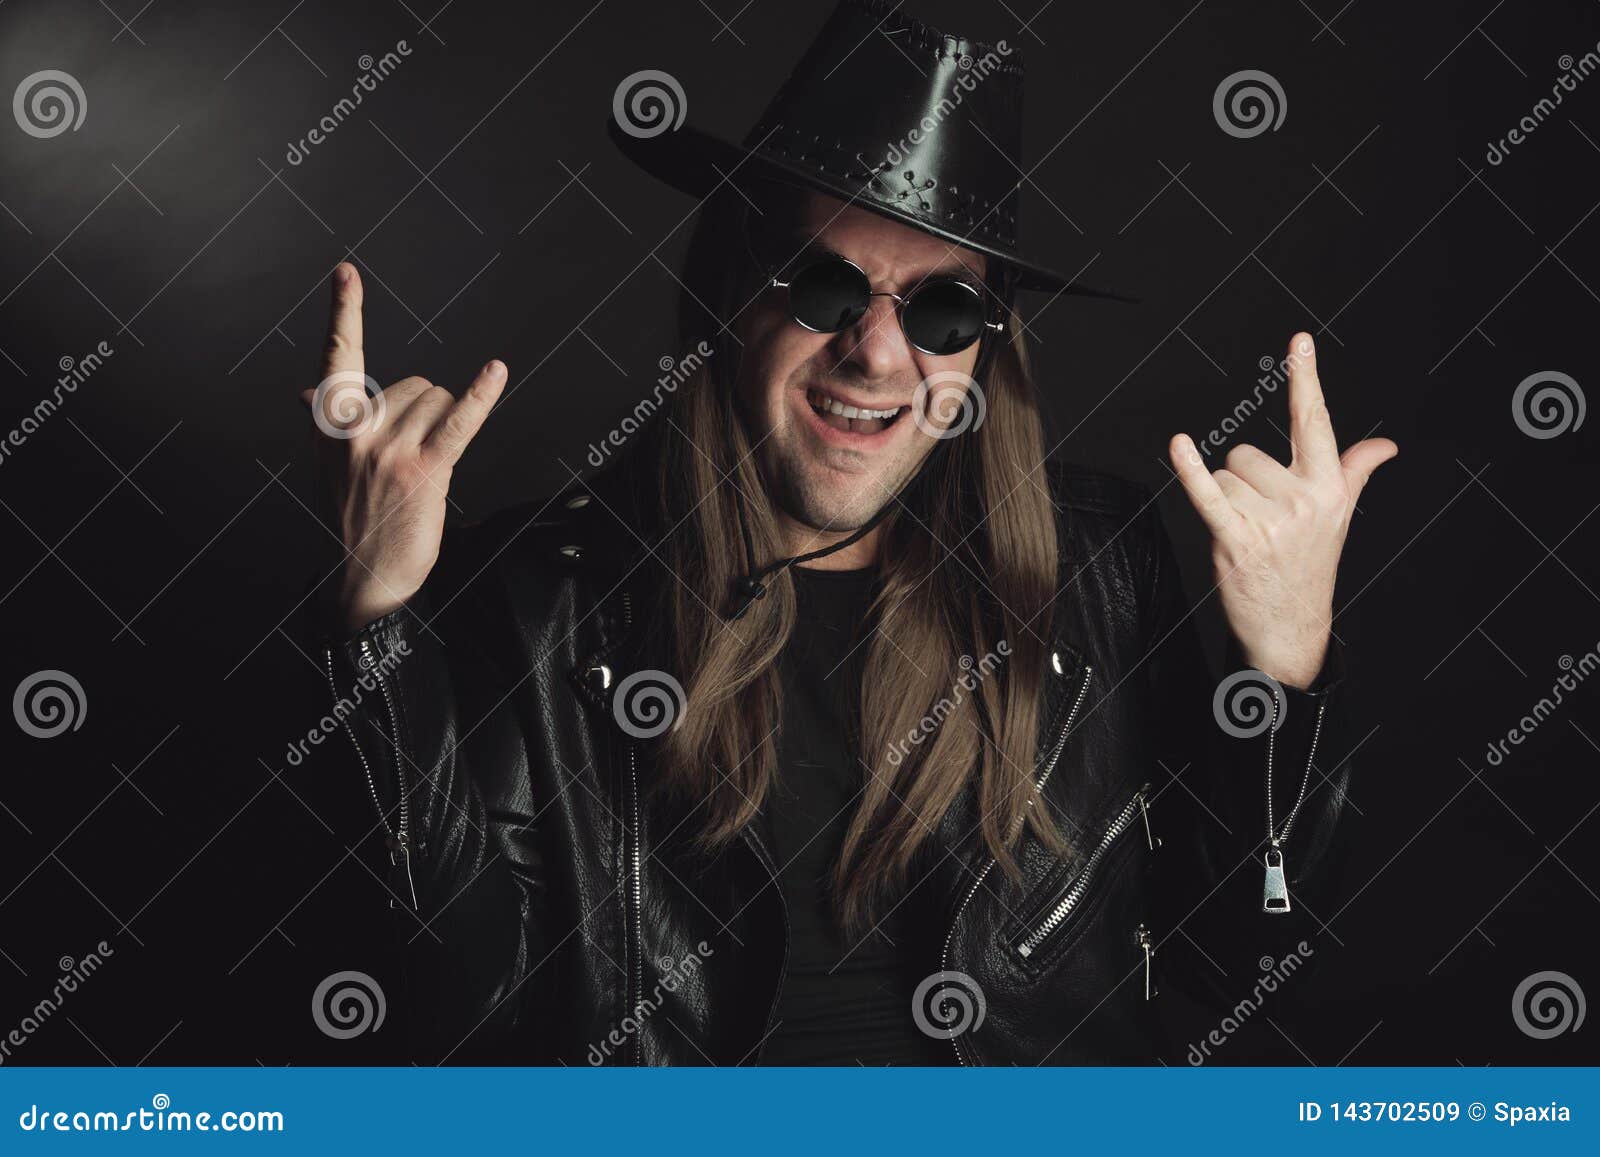 Punk rocker making a hardcore hand gesture Stock Photo by